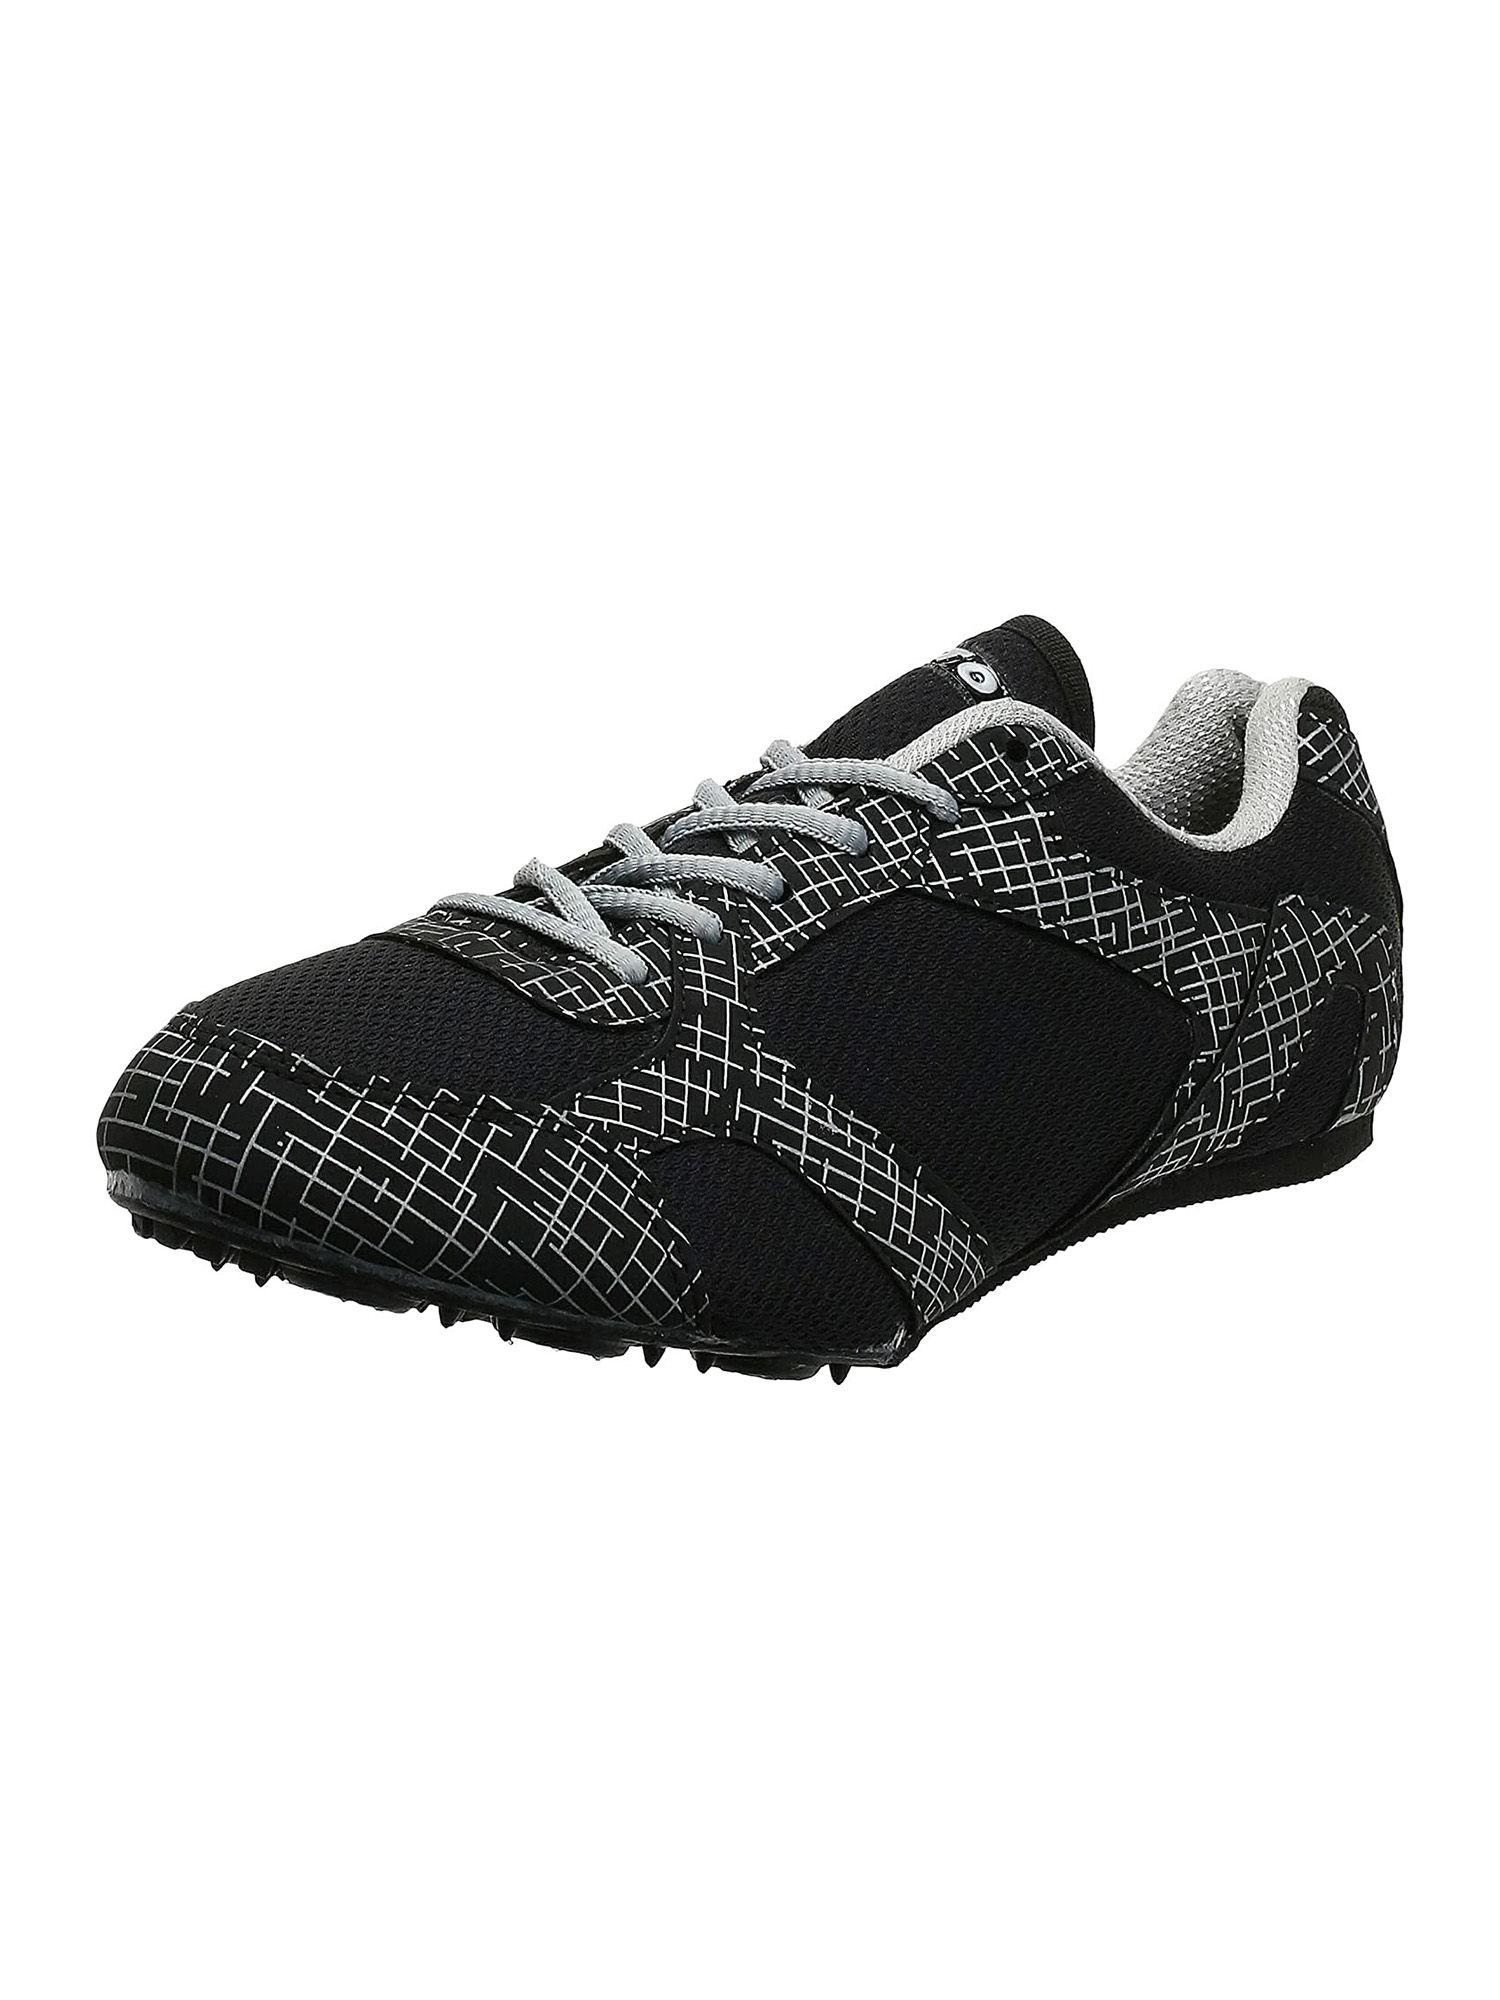 men-sprint-running-shoes-for-men-(black-grey)